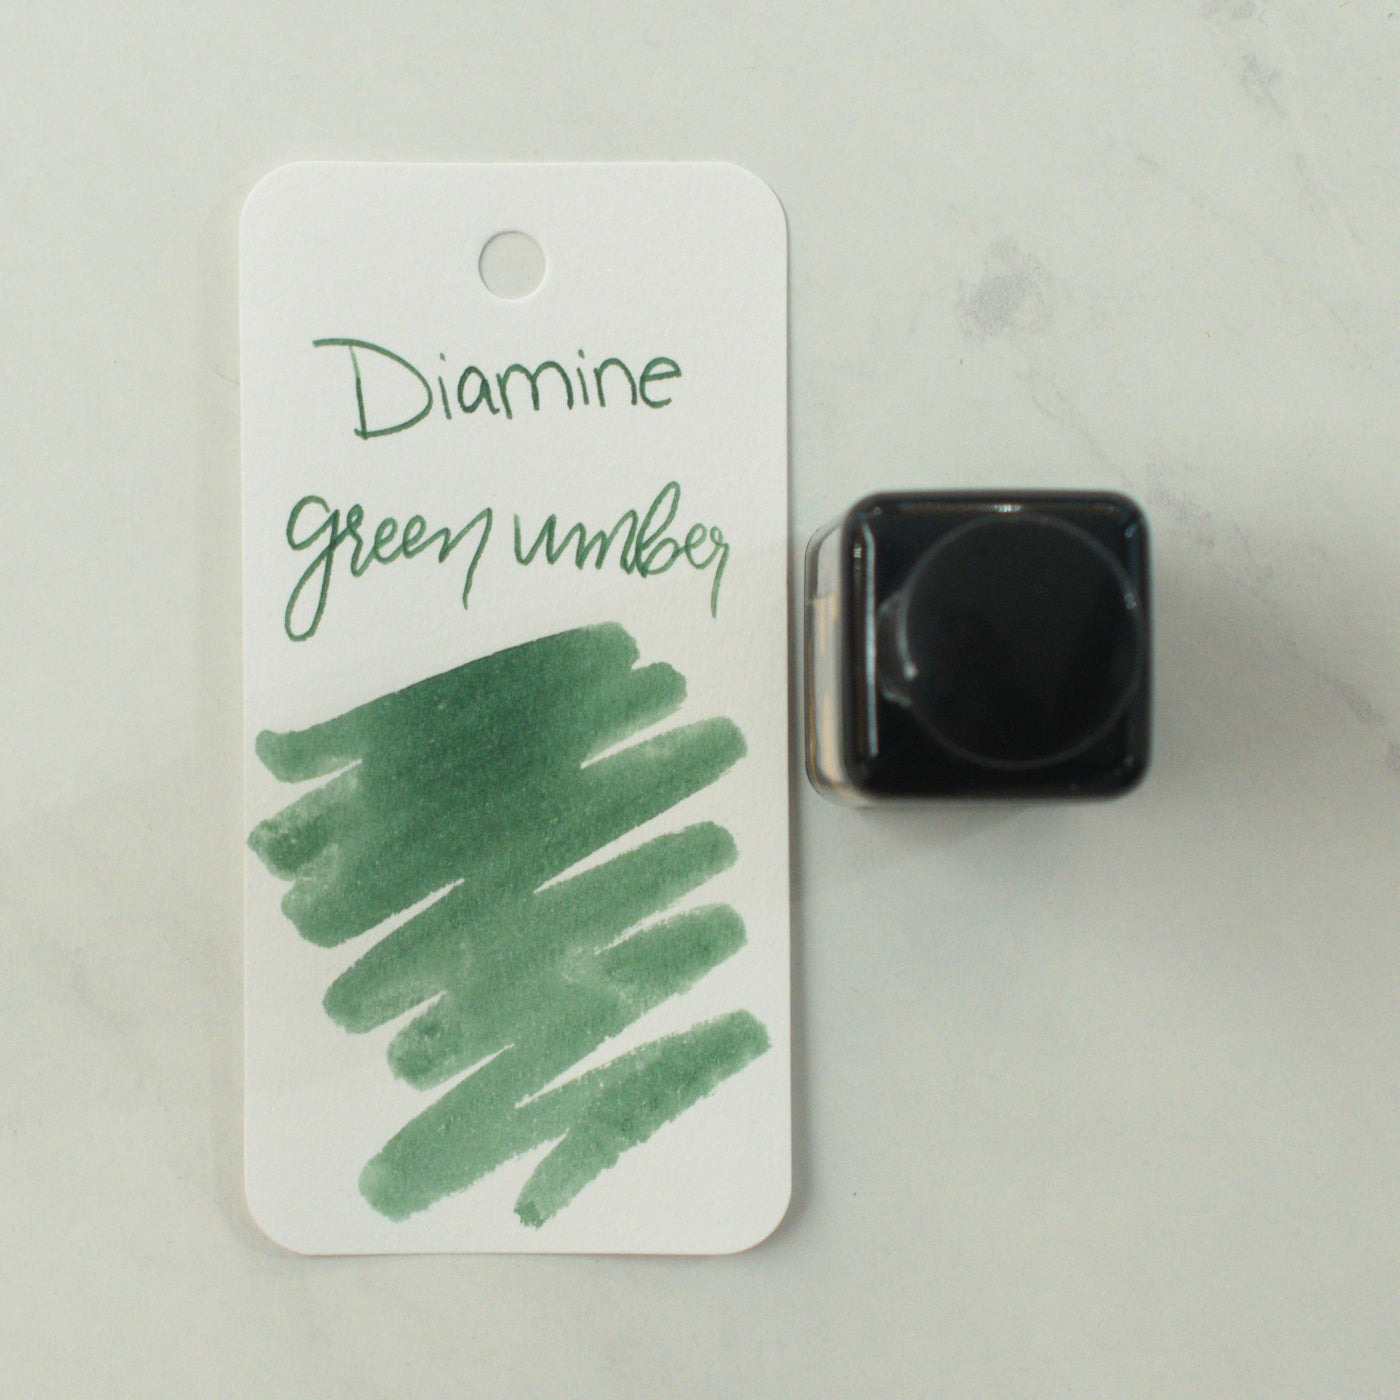 Diamine Charcoal Green Ink